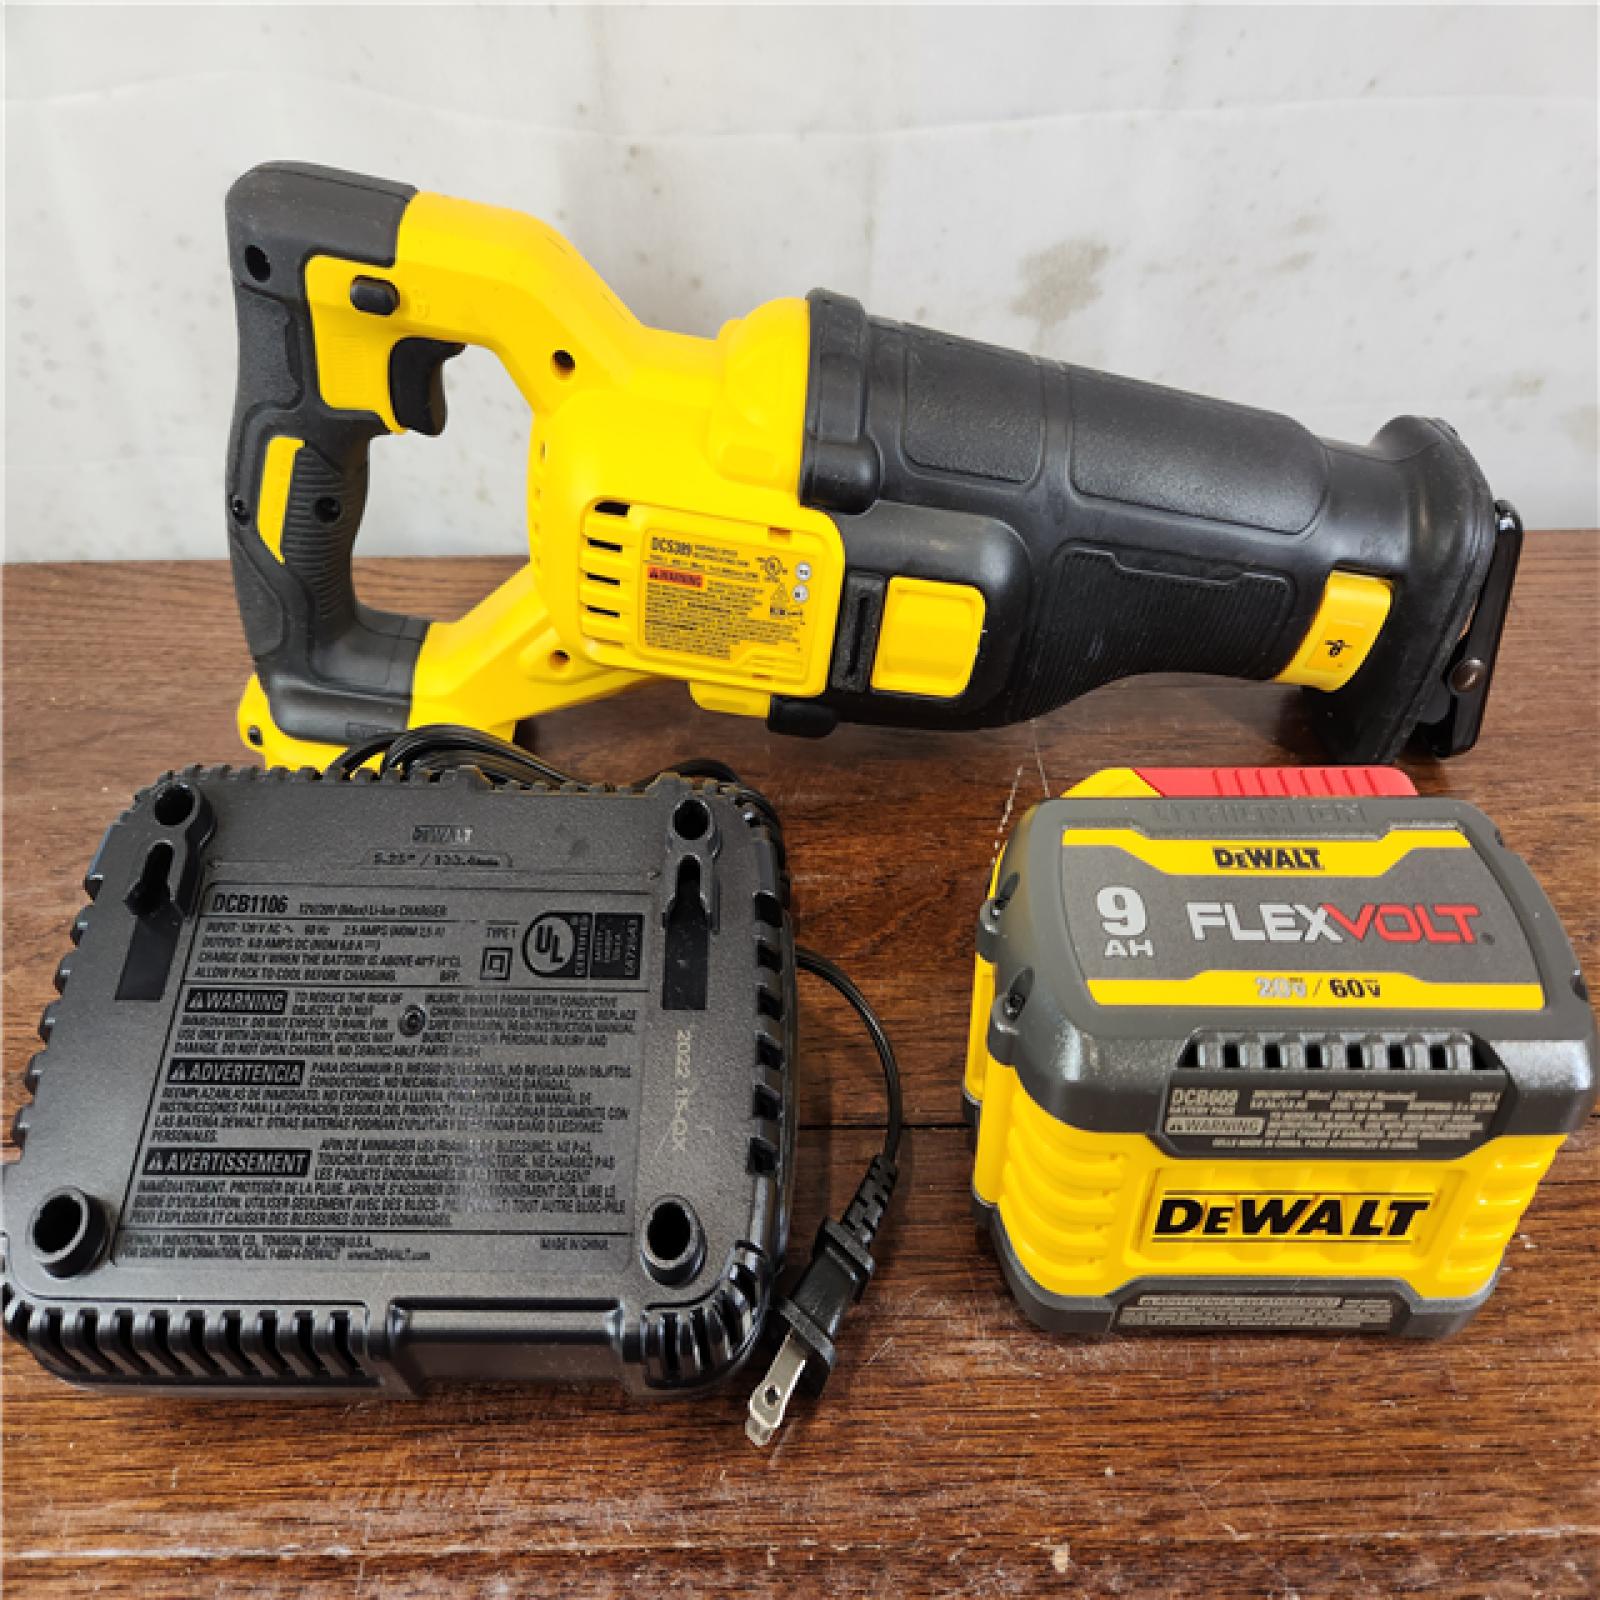 AS-IS DEWALT 60V MAX FLEXVOLT Brushless Cordless Reciprocating Saw Kit